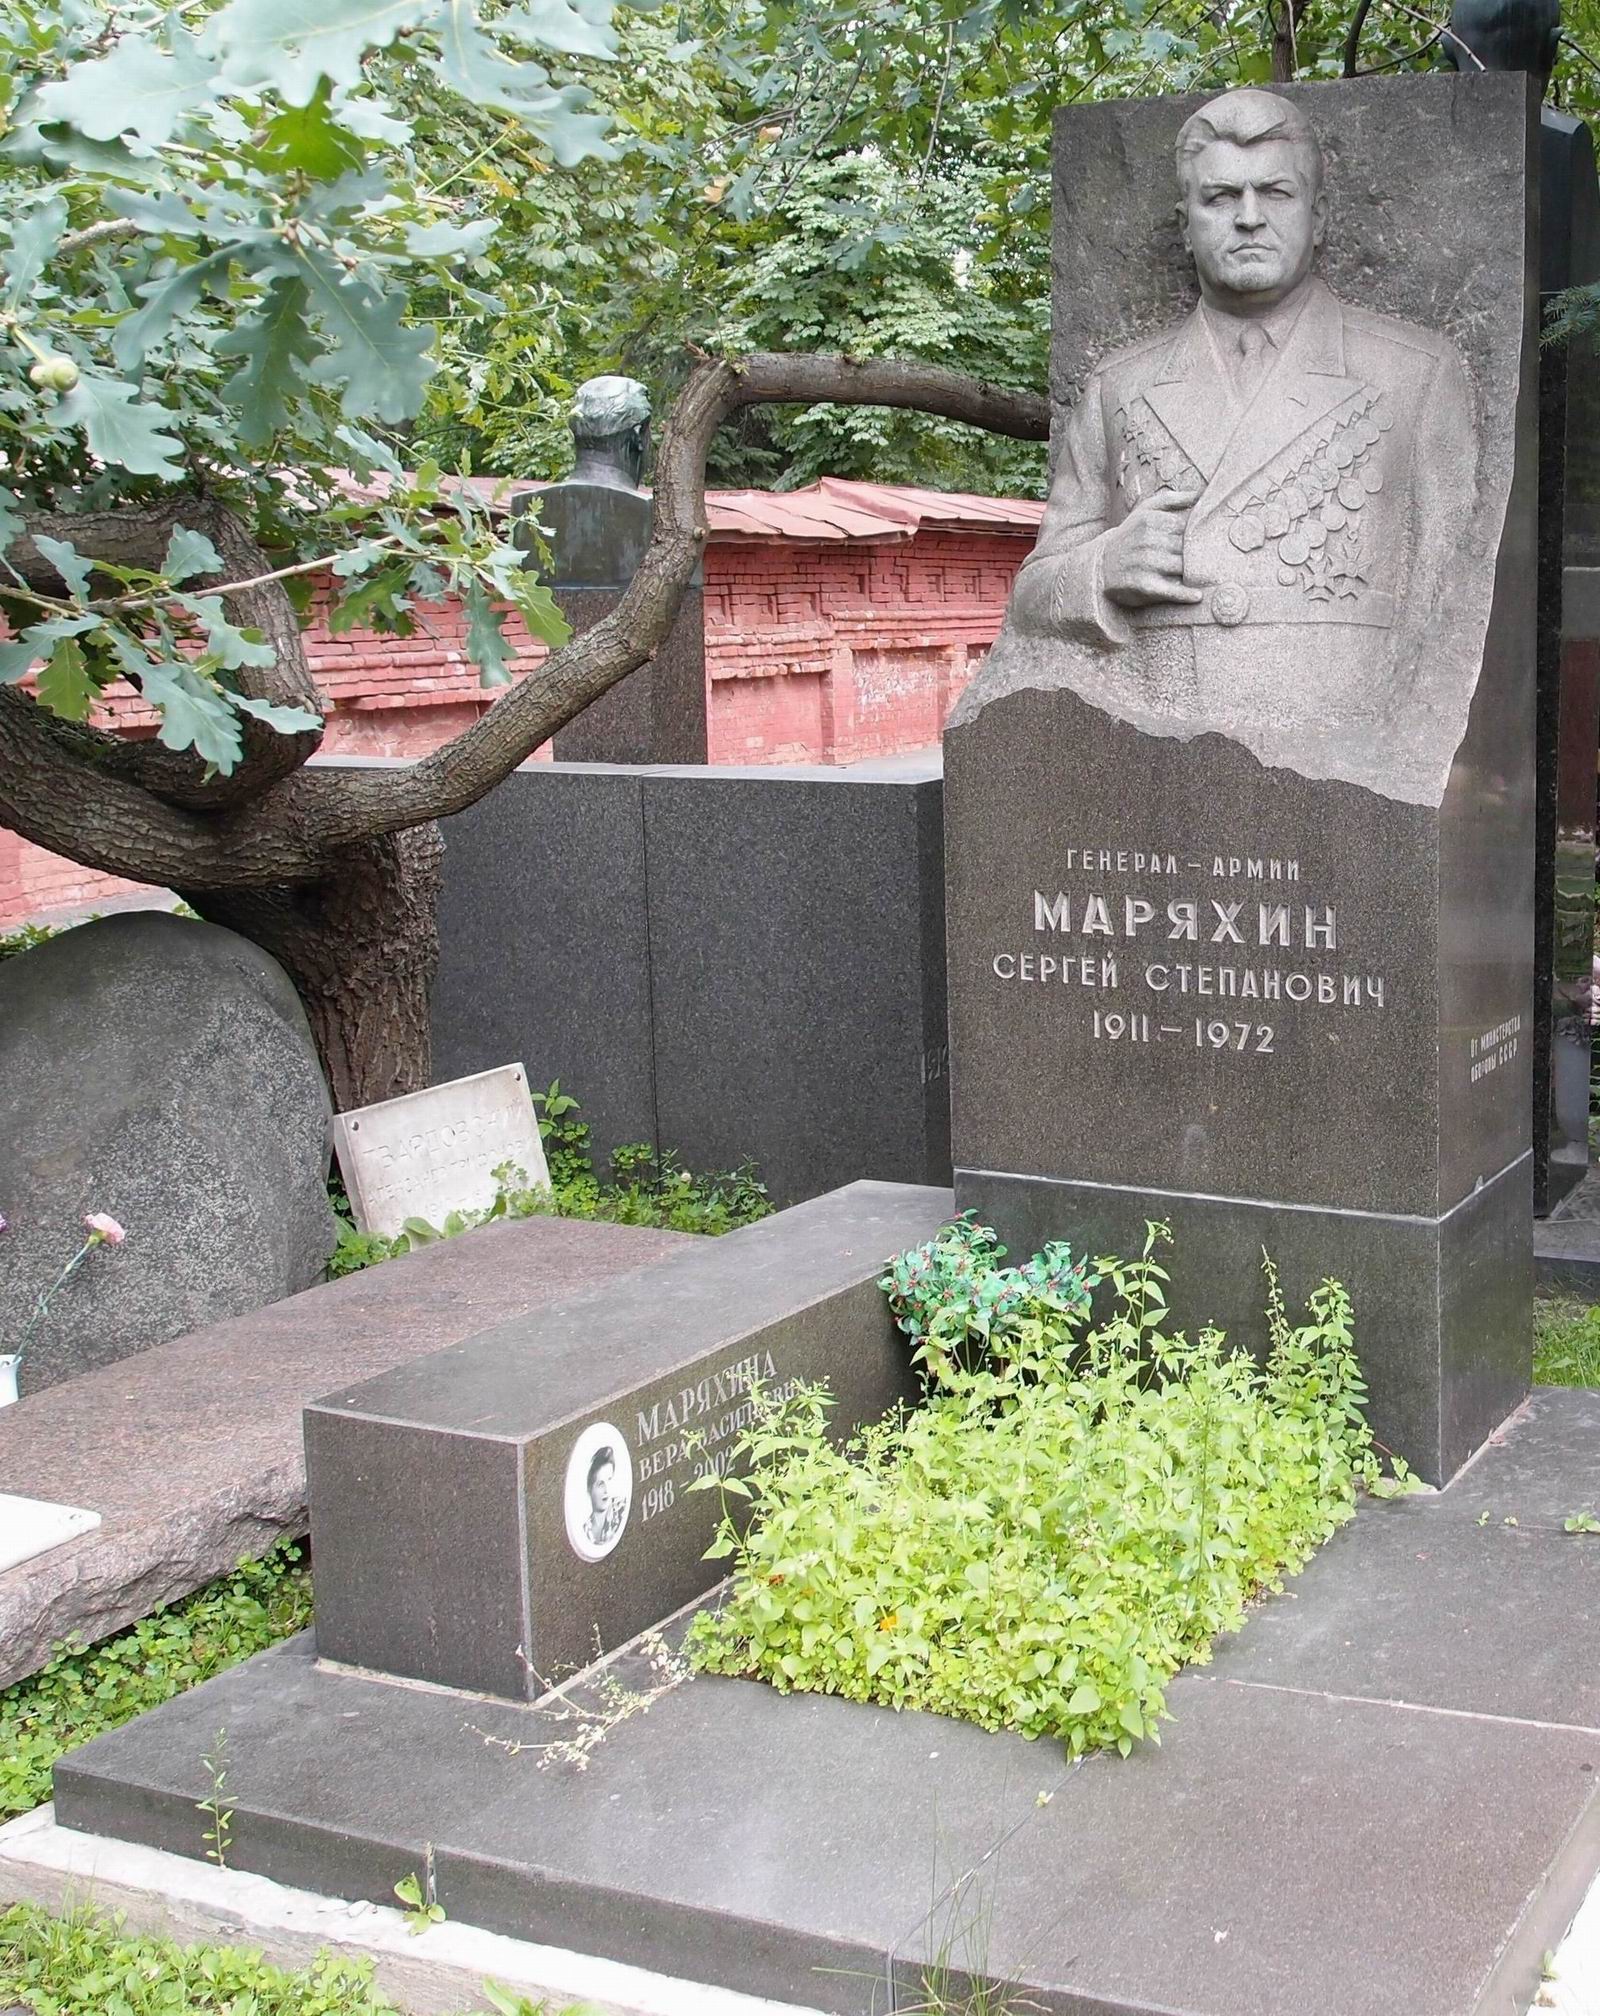 Памятник на могиле Маряхина С.С. (1911-1972), ск. А.Елецкий, на Новодевичьем кладбище (7-20-2).